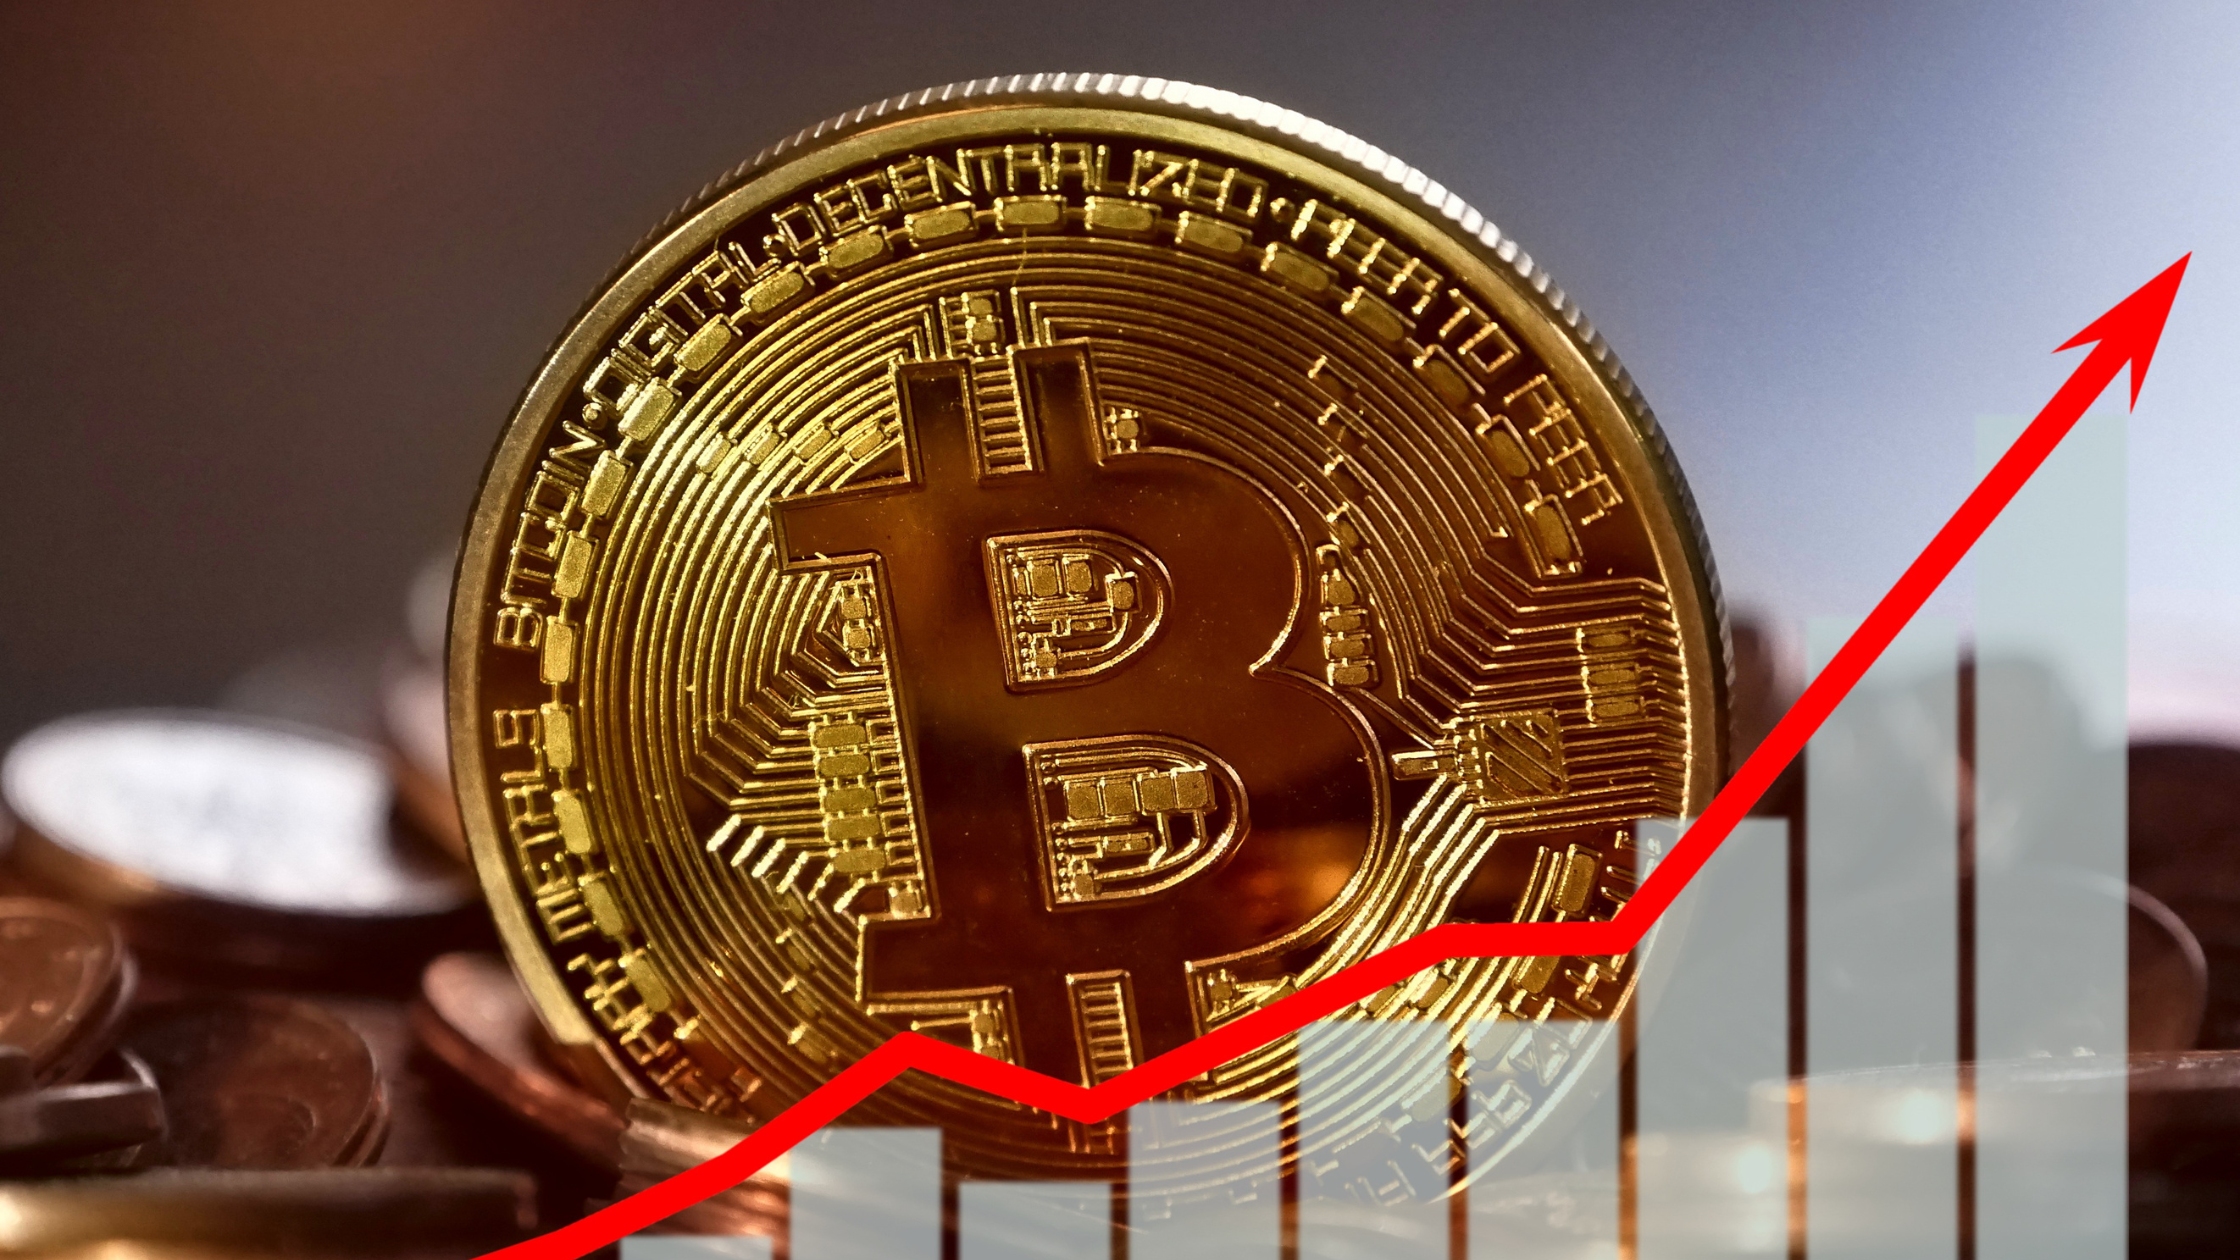 Bitcoin has risen to over 40000